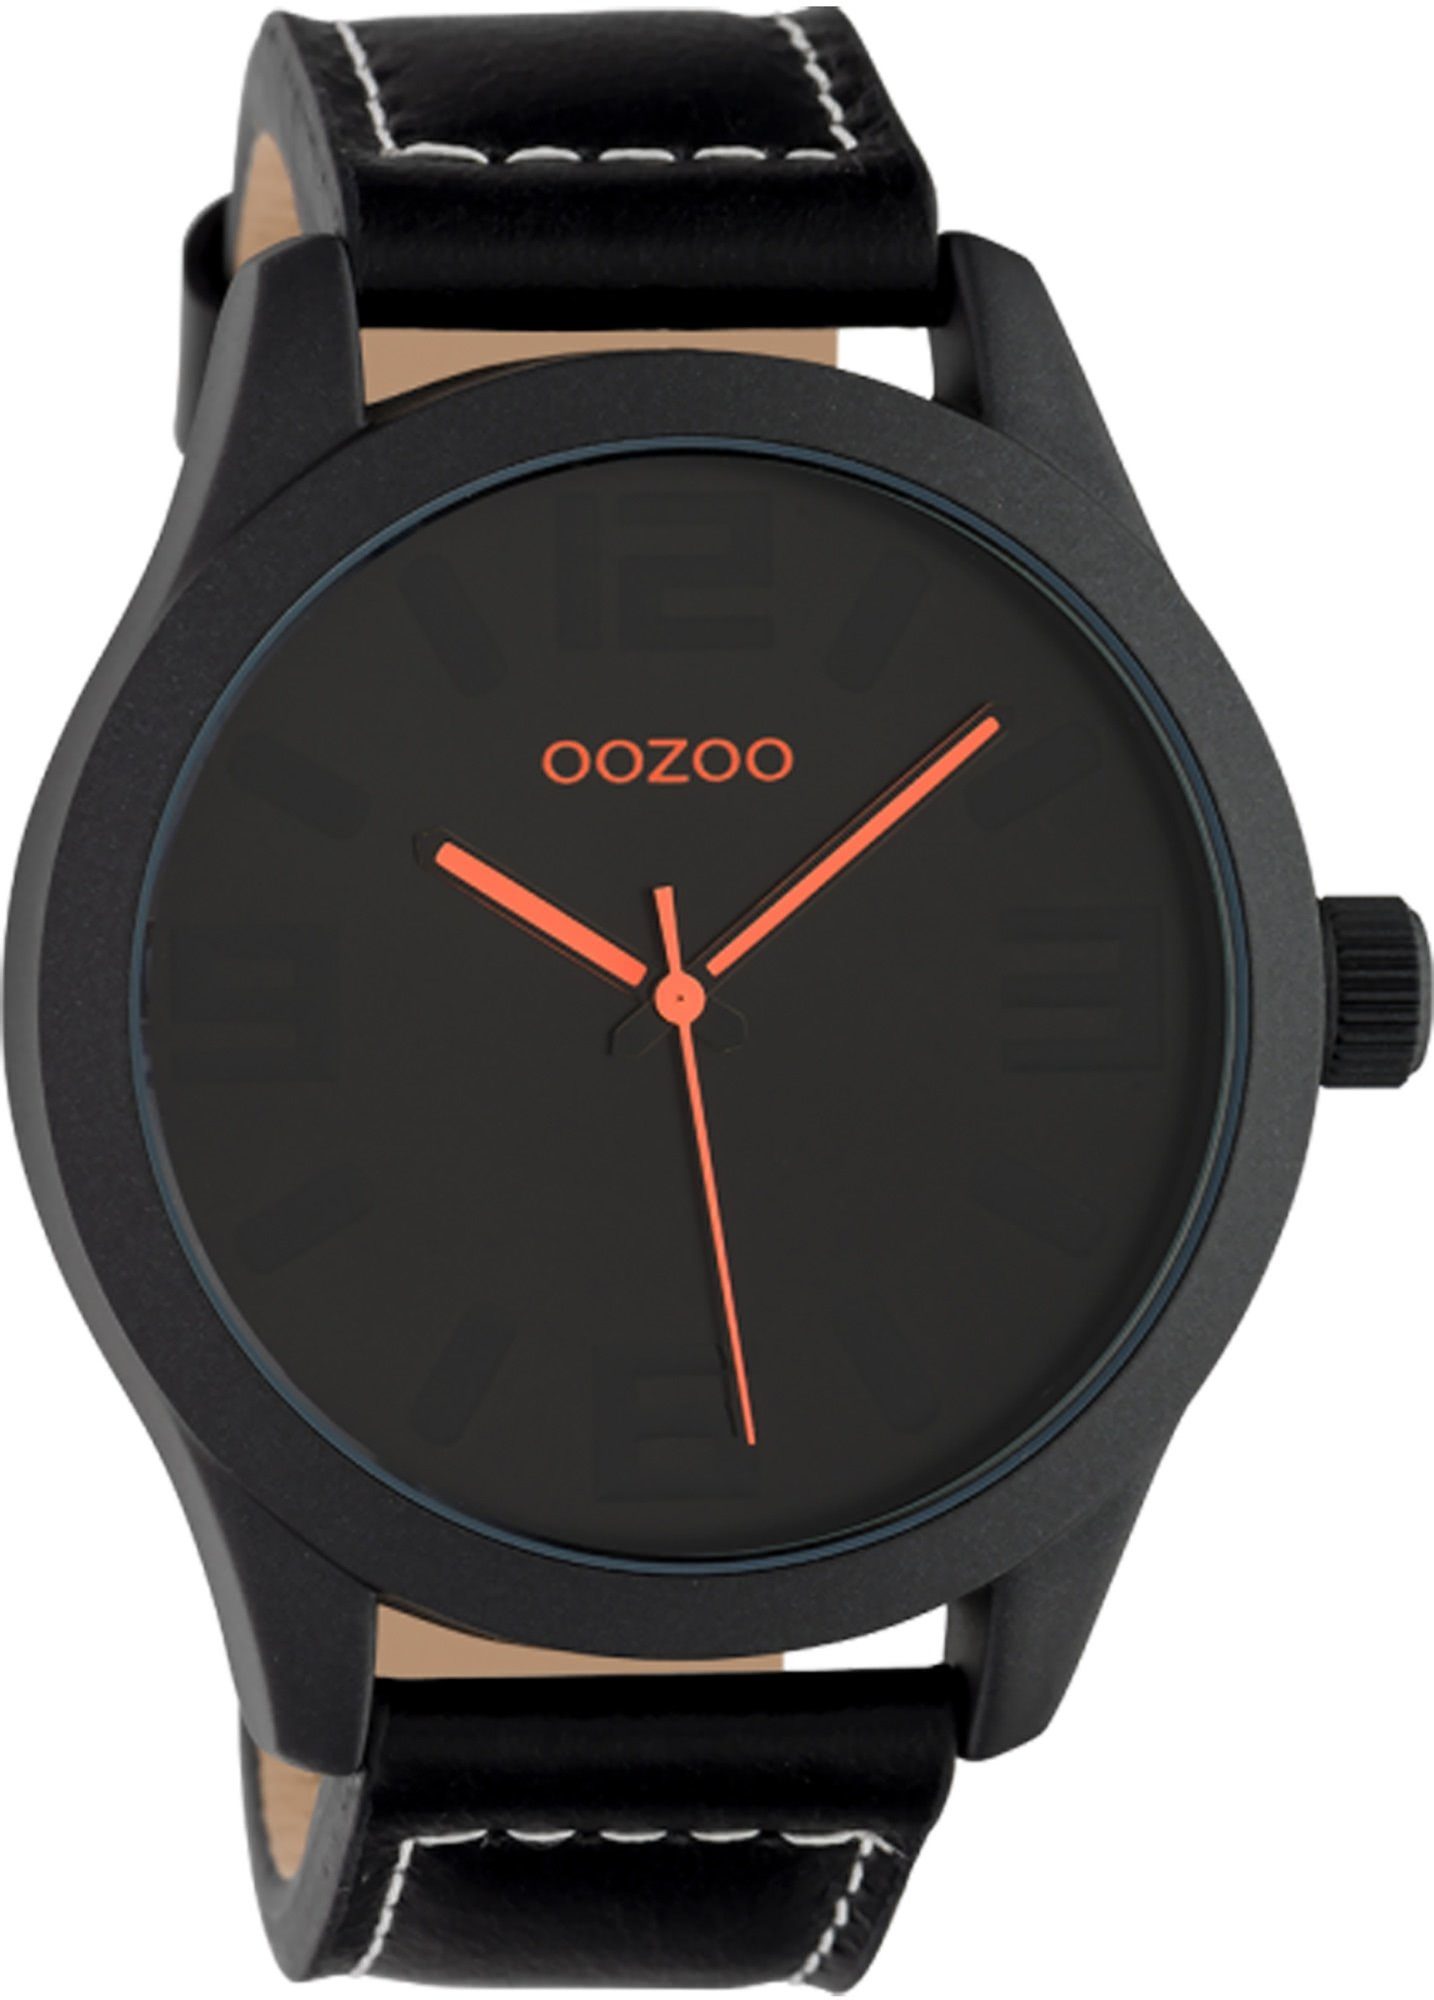 Oozoo Herrenuhr Armbanduhr OOZOO Lederarmband, extra (ca. rund, schwarz Herren Fashion-Style 46mm) groß Analog, Quarzuhr